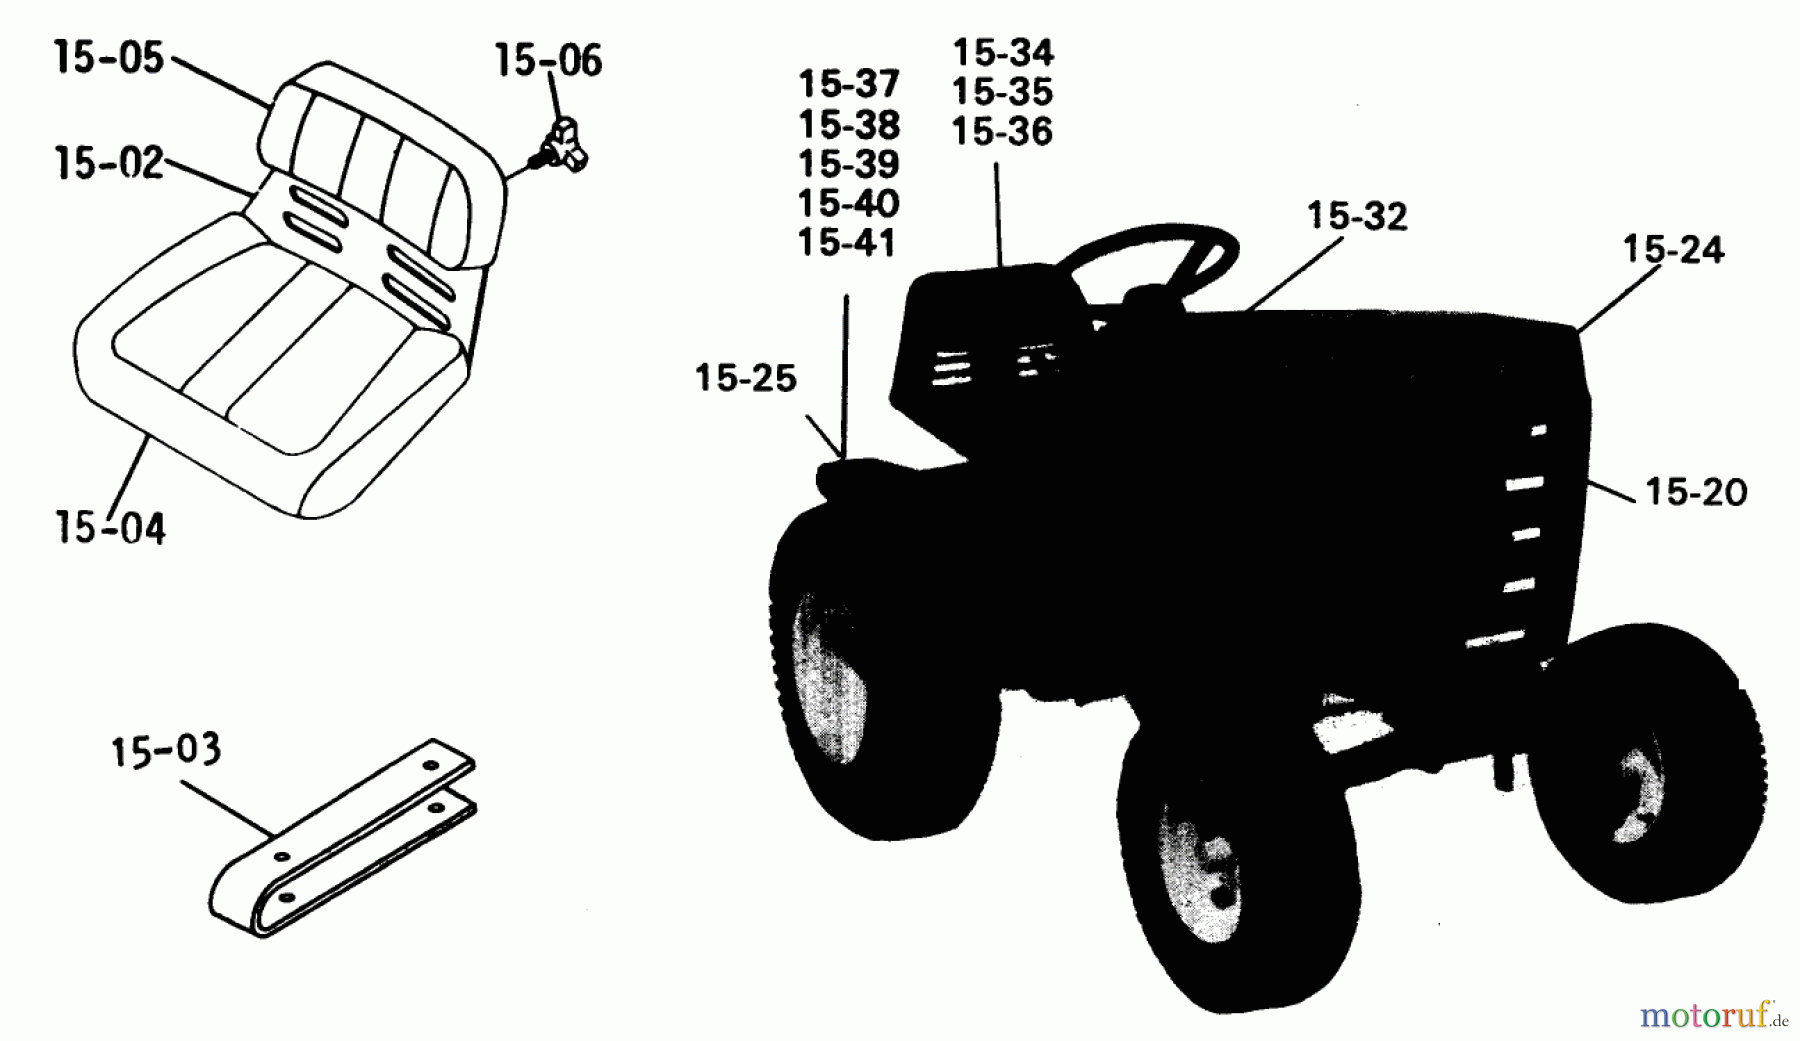  Toro Neu Mowers, Lawn & Garden Tractor Seite 1 1-0381 (C-160) - Toro C-160 8-Speed Tractor, 1975 15.000 SEATS, DECALS MISC. TRIM (FIG. 15)